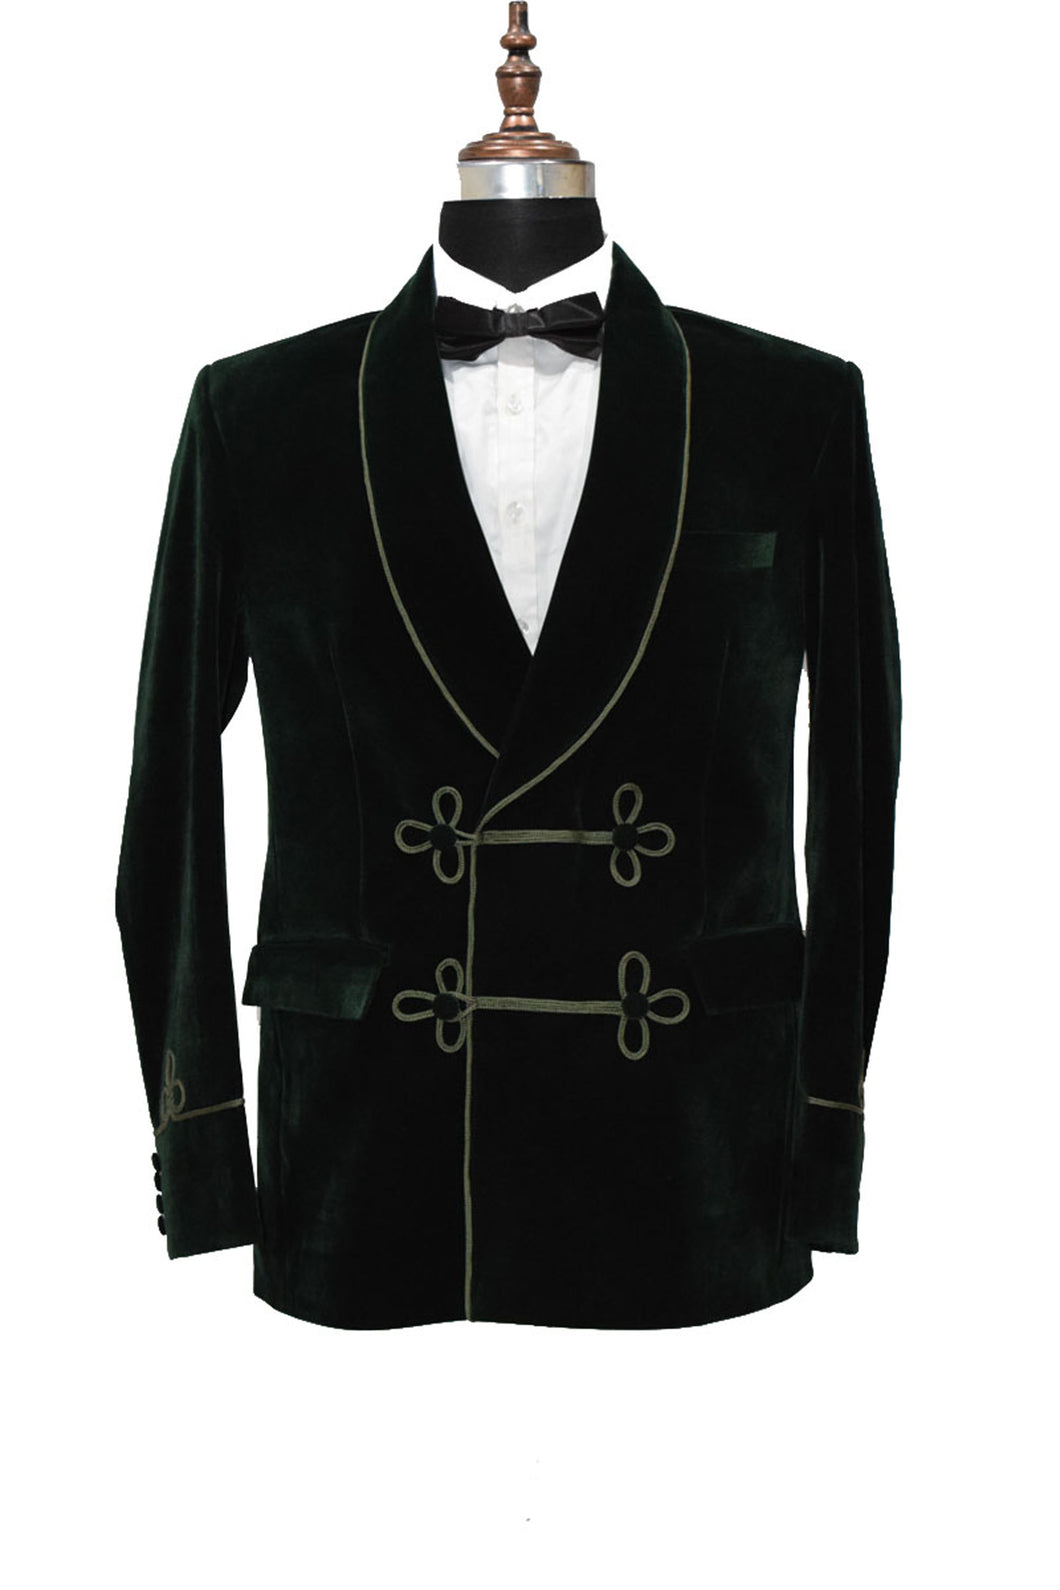 Men Green Smoking Jacket Wedding Party Wear Blazer - TrendsfashionIN